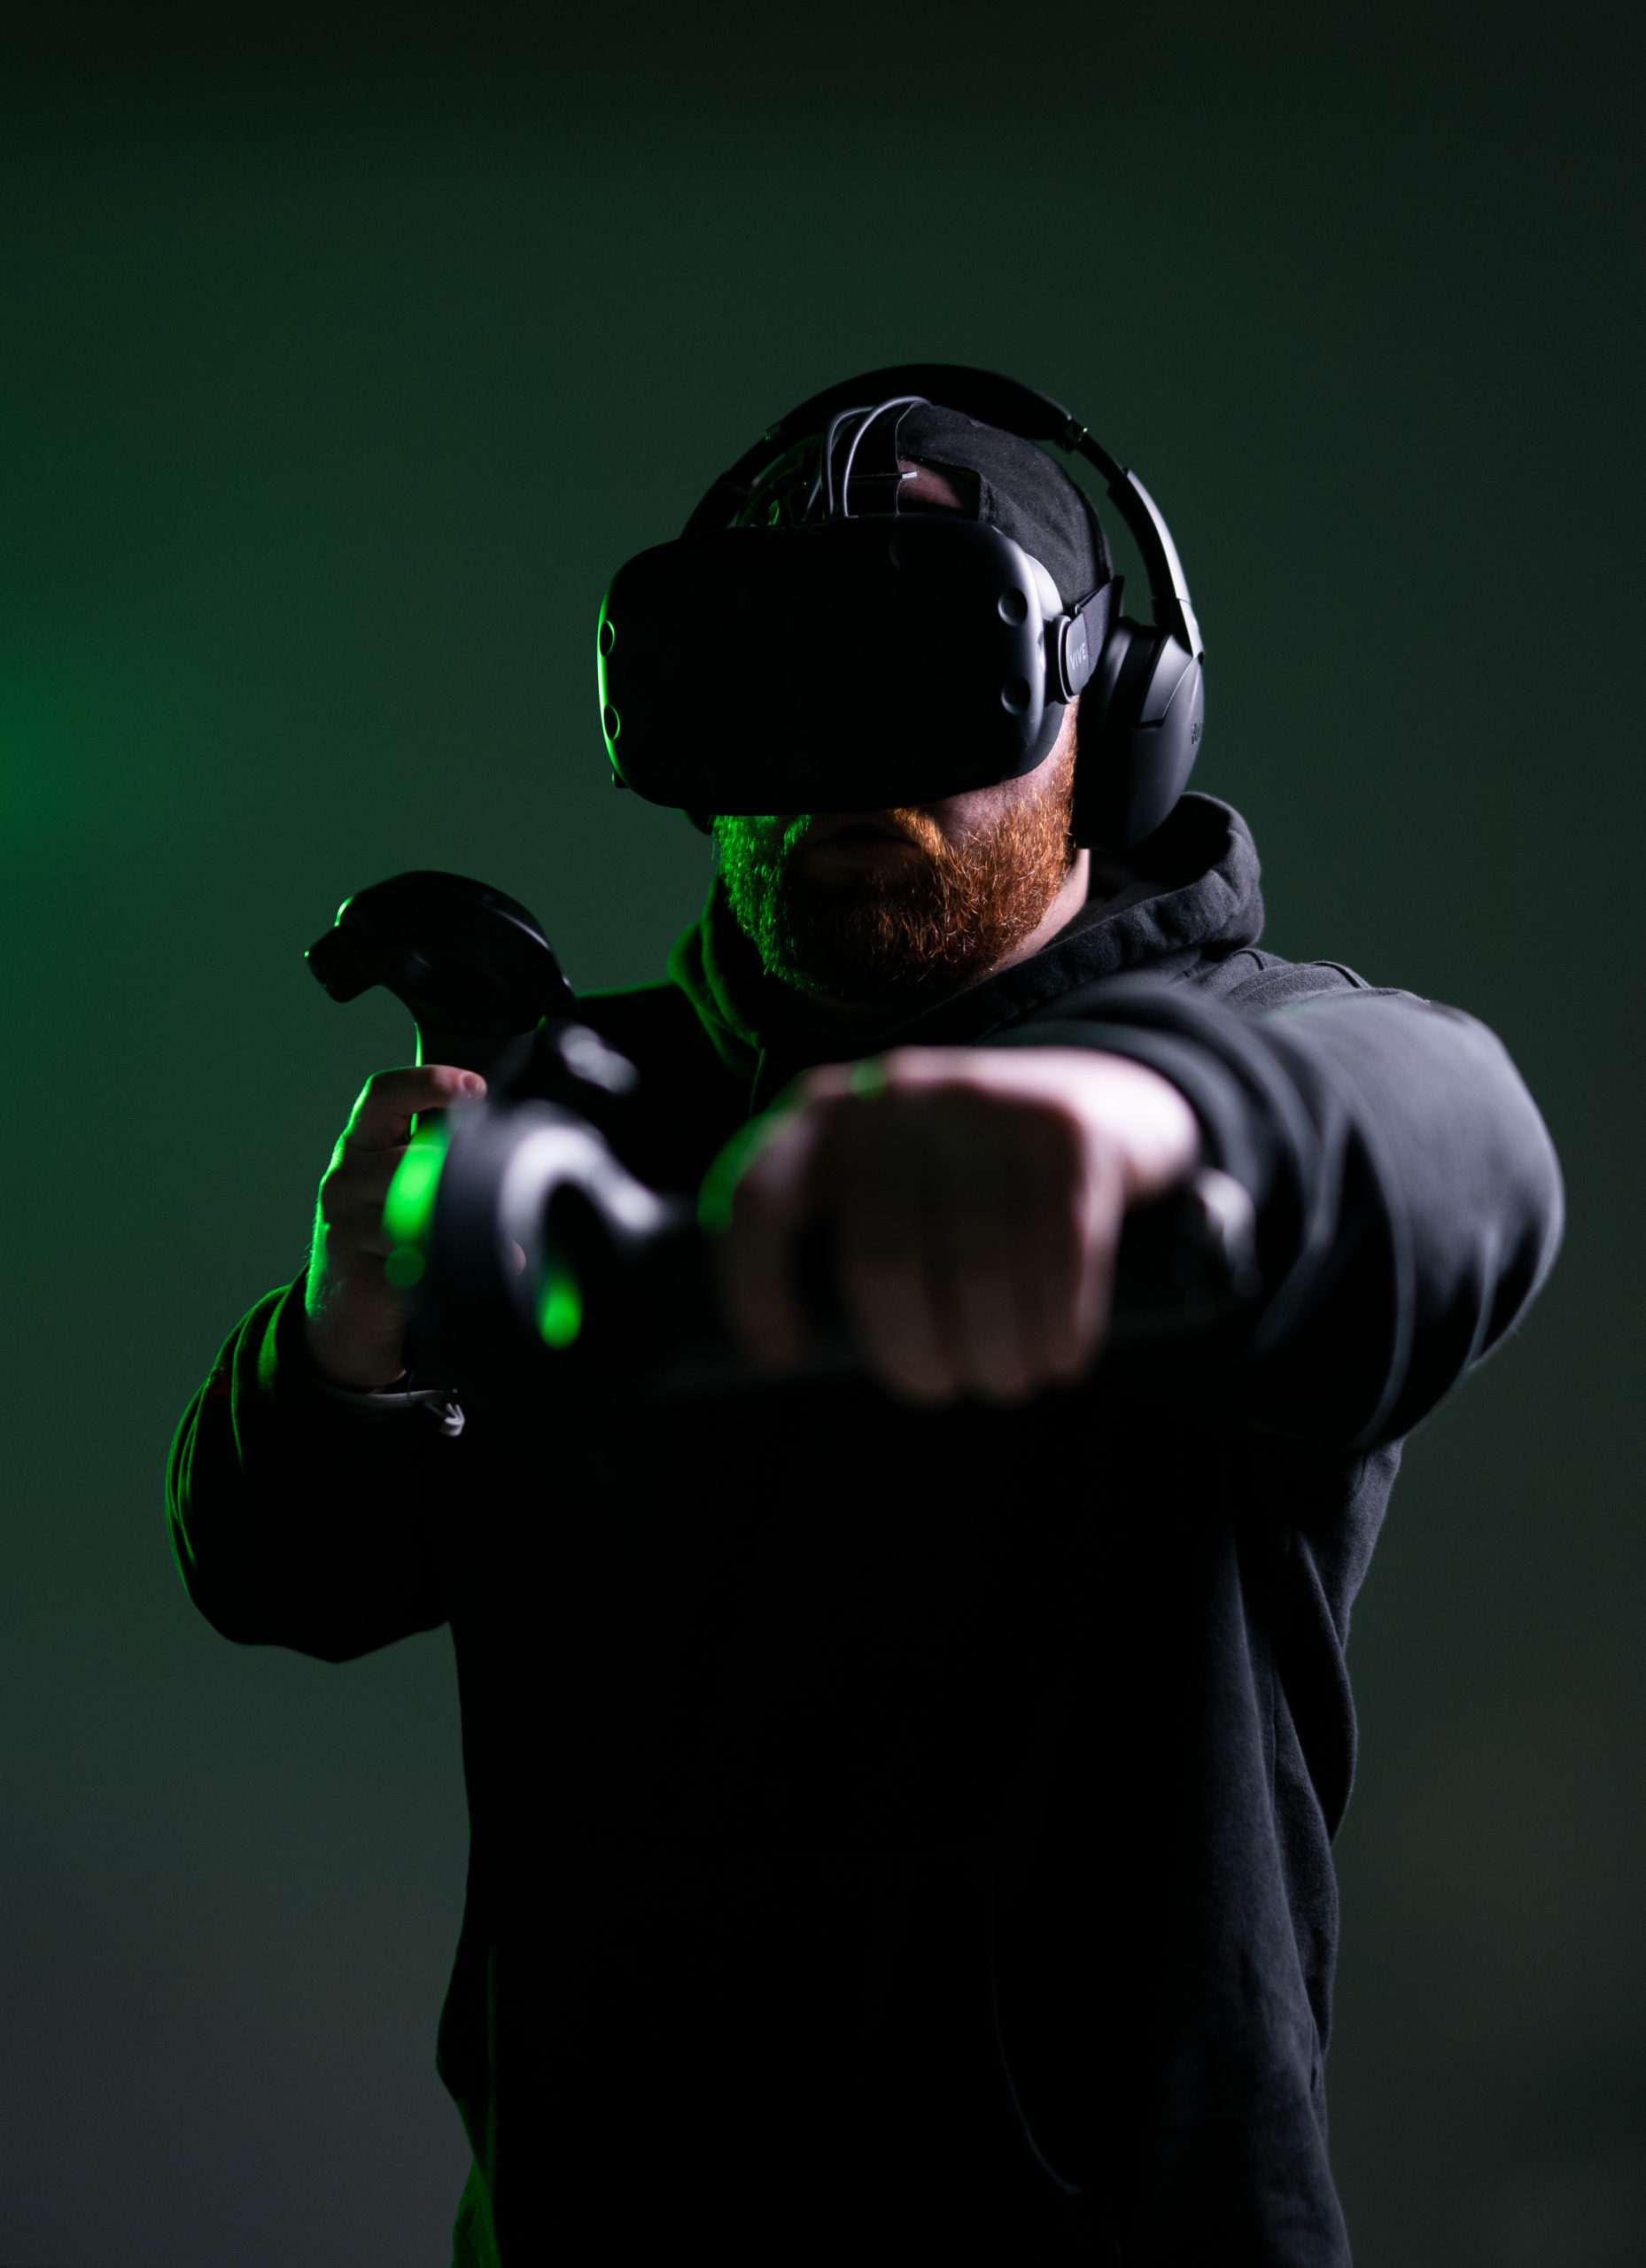 Man wearing VR headset and gloves in dark green lighting